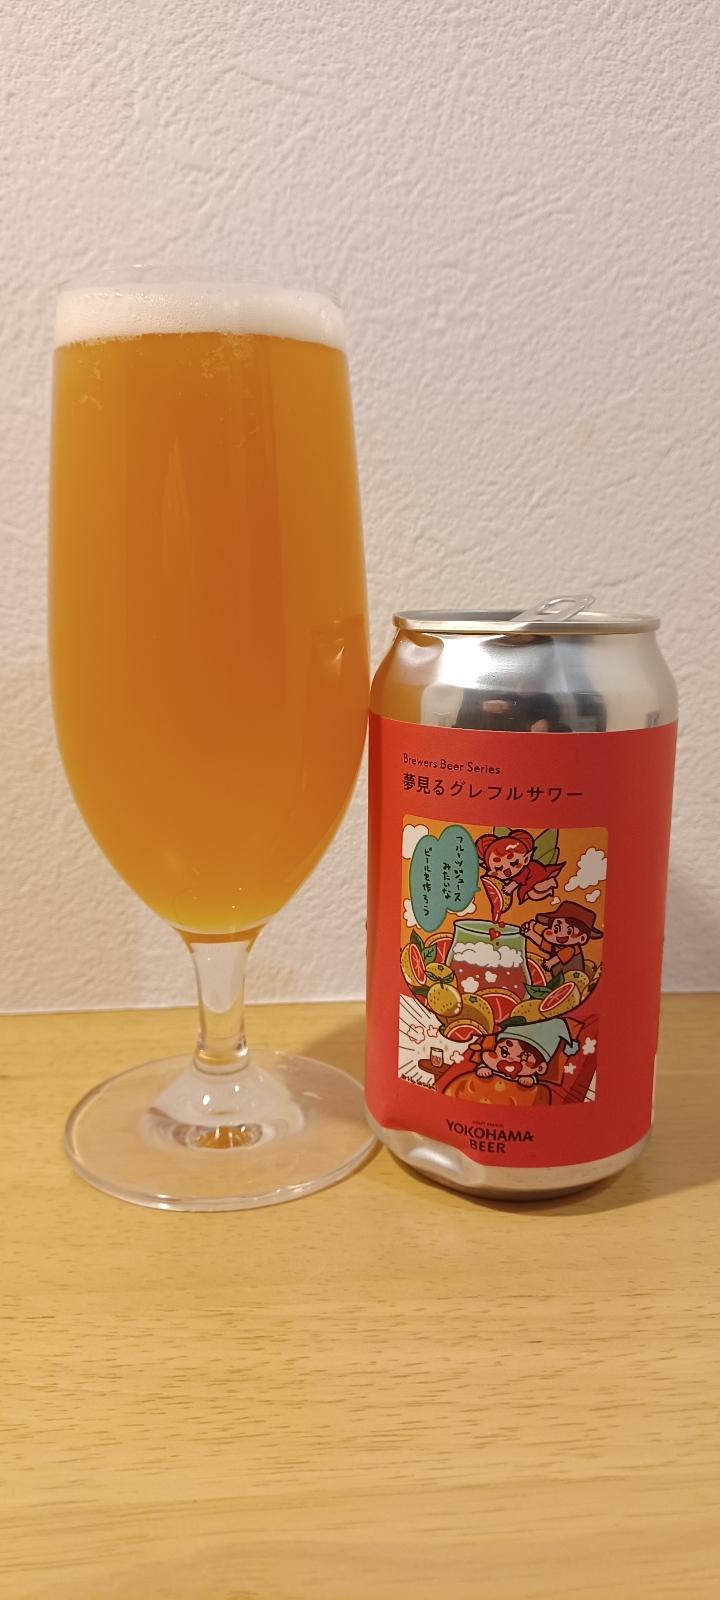 Brewers Beer Series: Yumemiru Grapefruit Sour